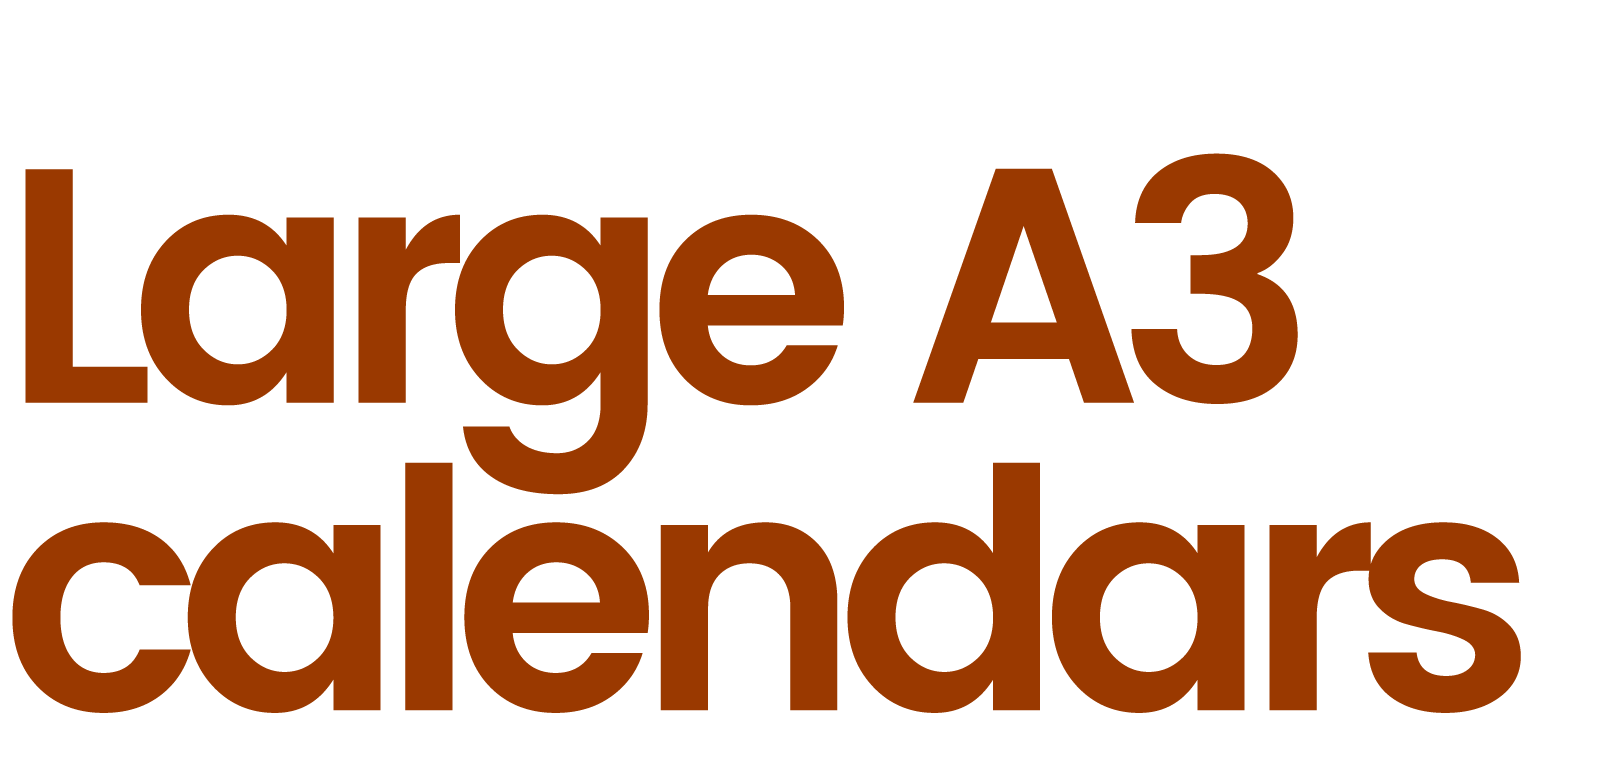 Make an impact - large A3 wall calendars